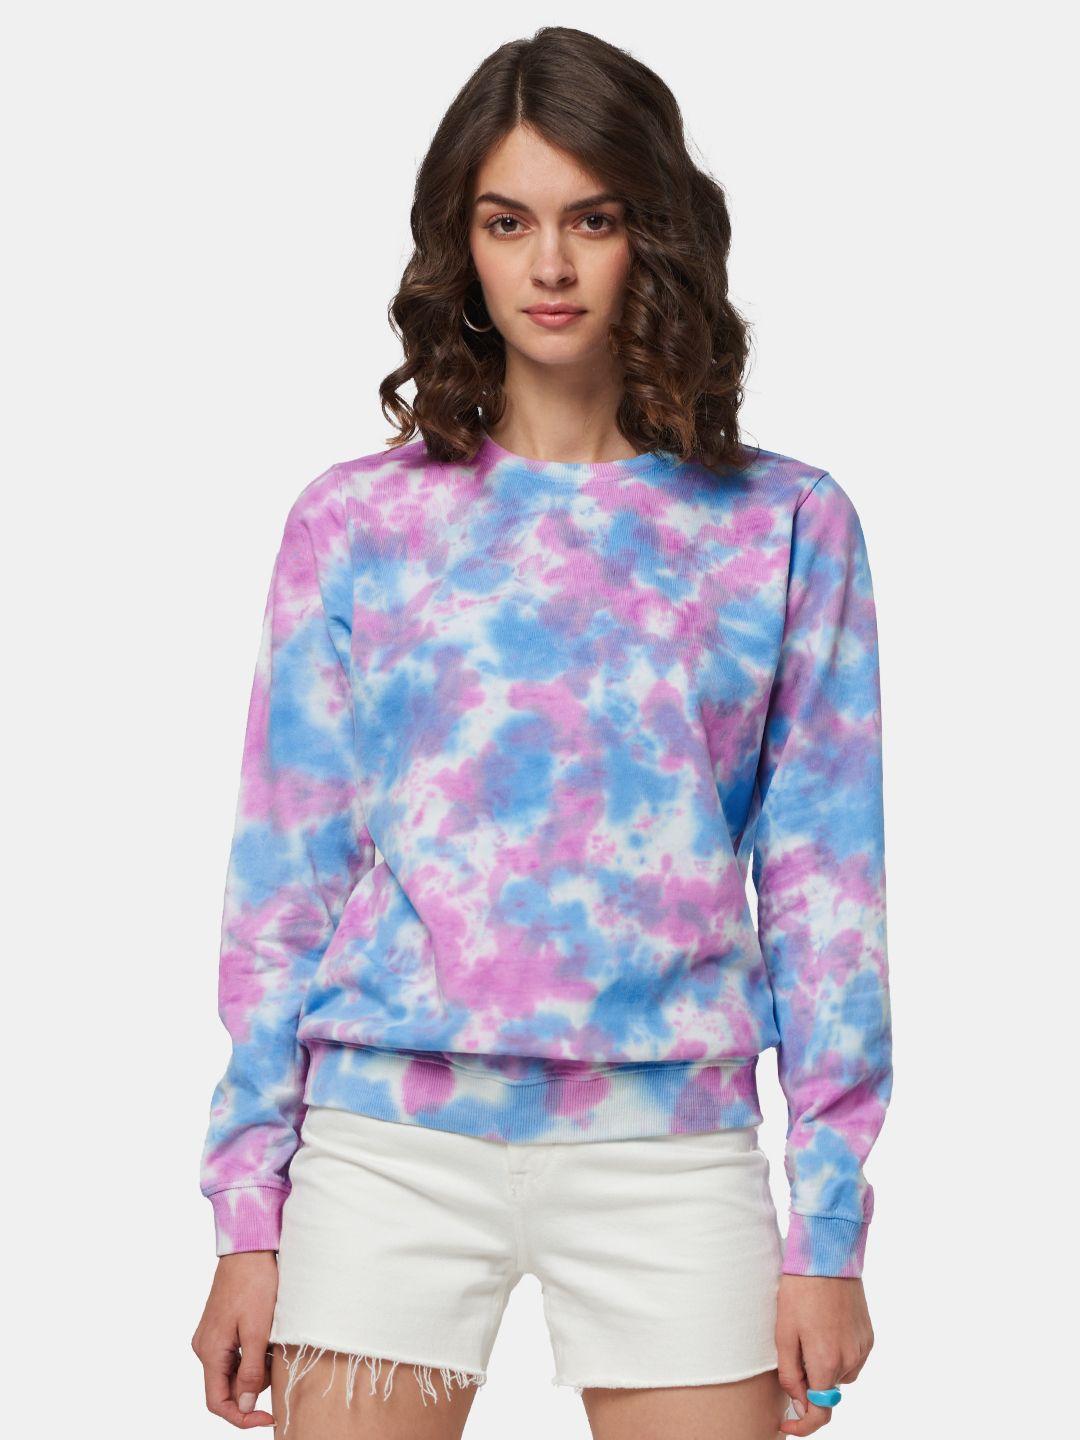 the souled store women multicoloured tie & dye printed sweatshirt